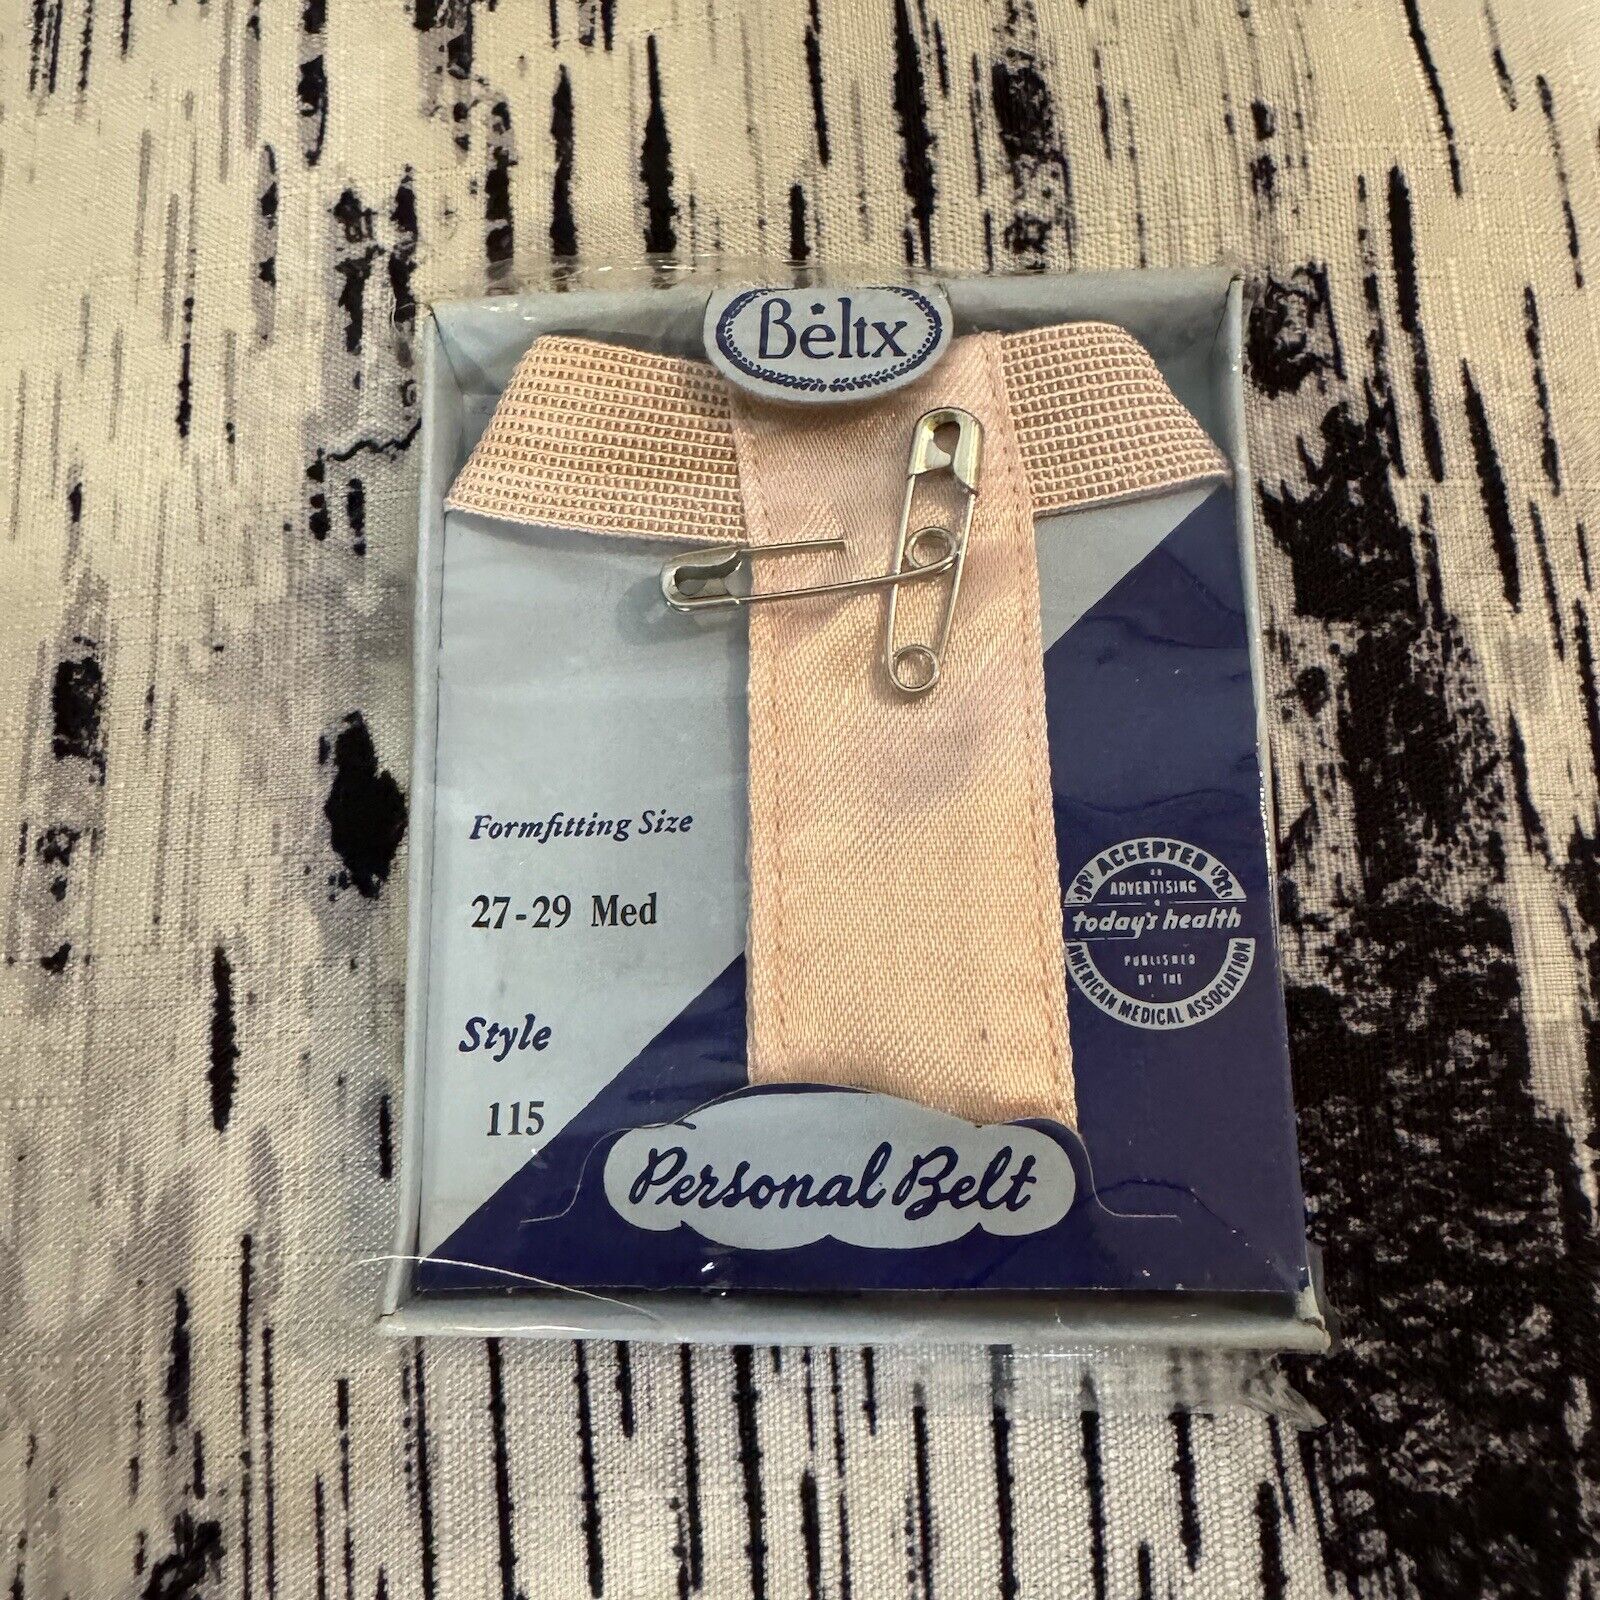 Vintage Beltx Sanitary Personal Belt Holds Sanitary Napkin New Original Package